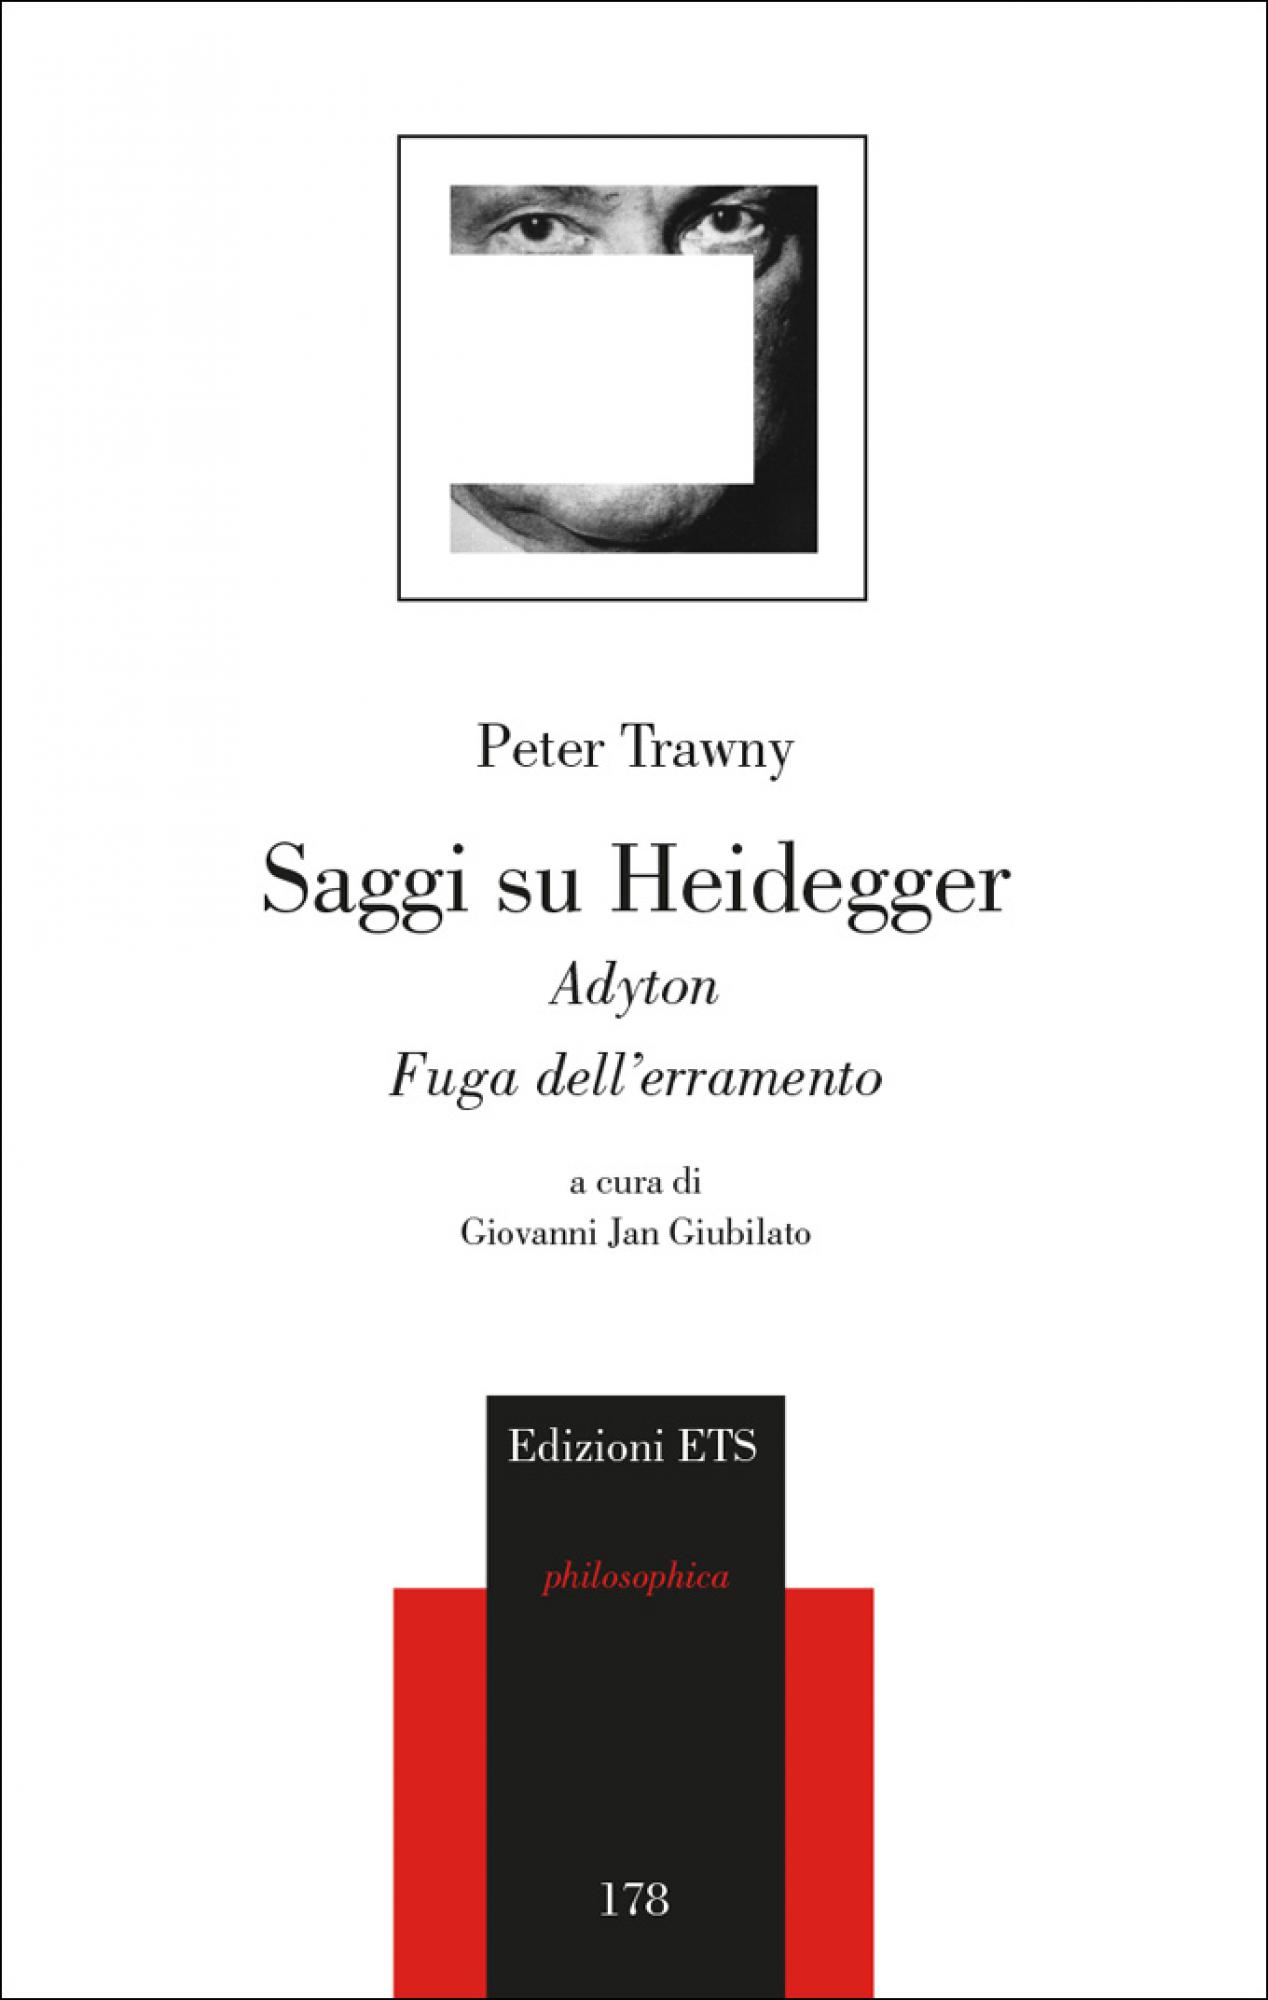 Saggi su Heidegger.Adyton, Fuga dell'erramento